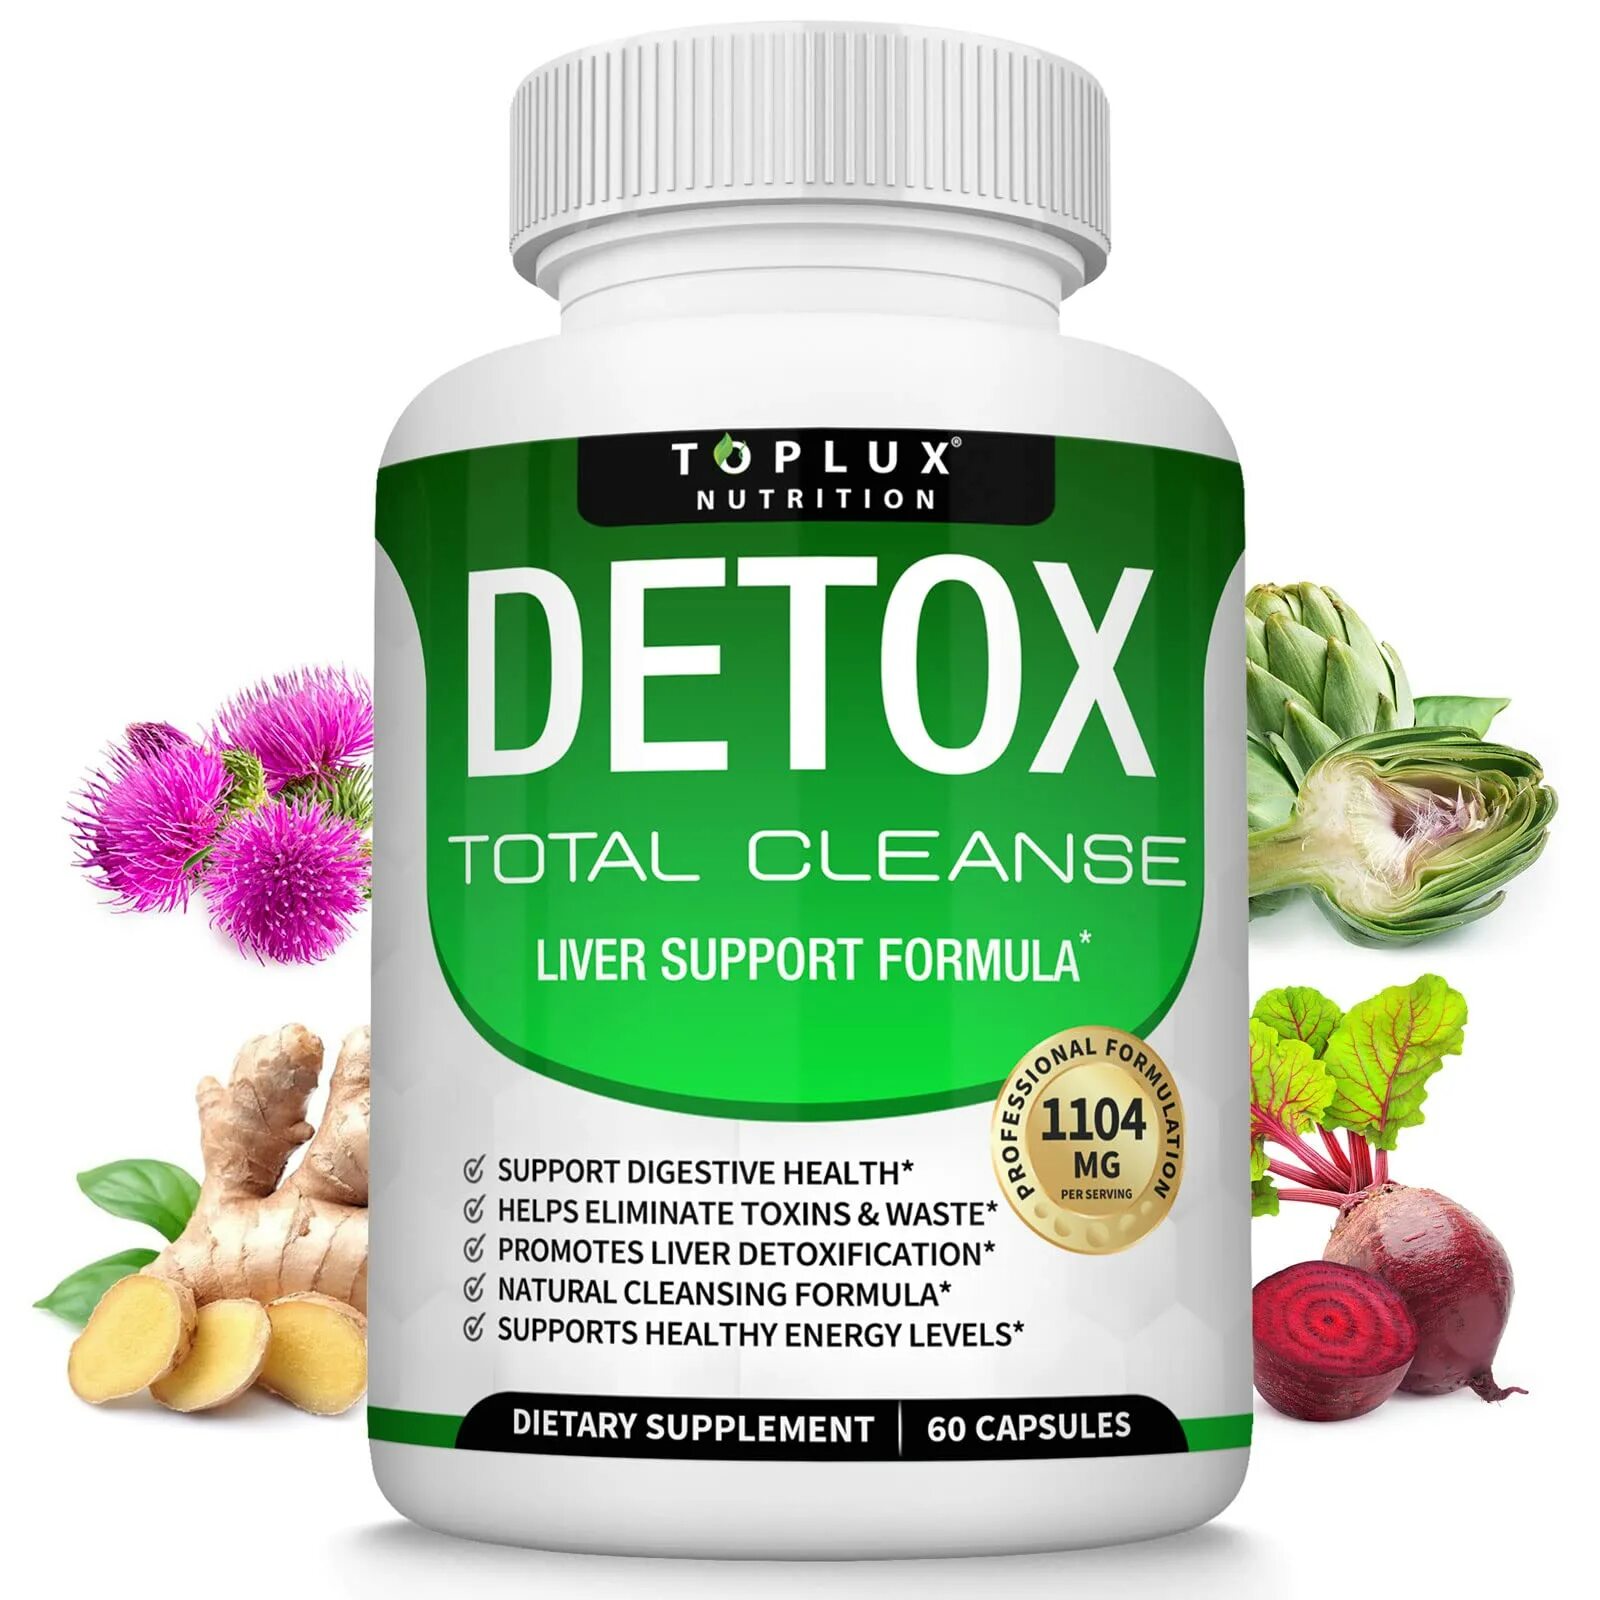 Body cleanse. Liver Cleanser (Detox). Liver Detox support. Total Cleanse. Liver Detox support от Protocol for Life Balance,.